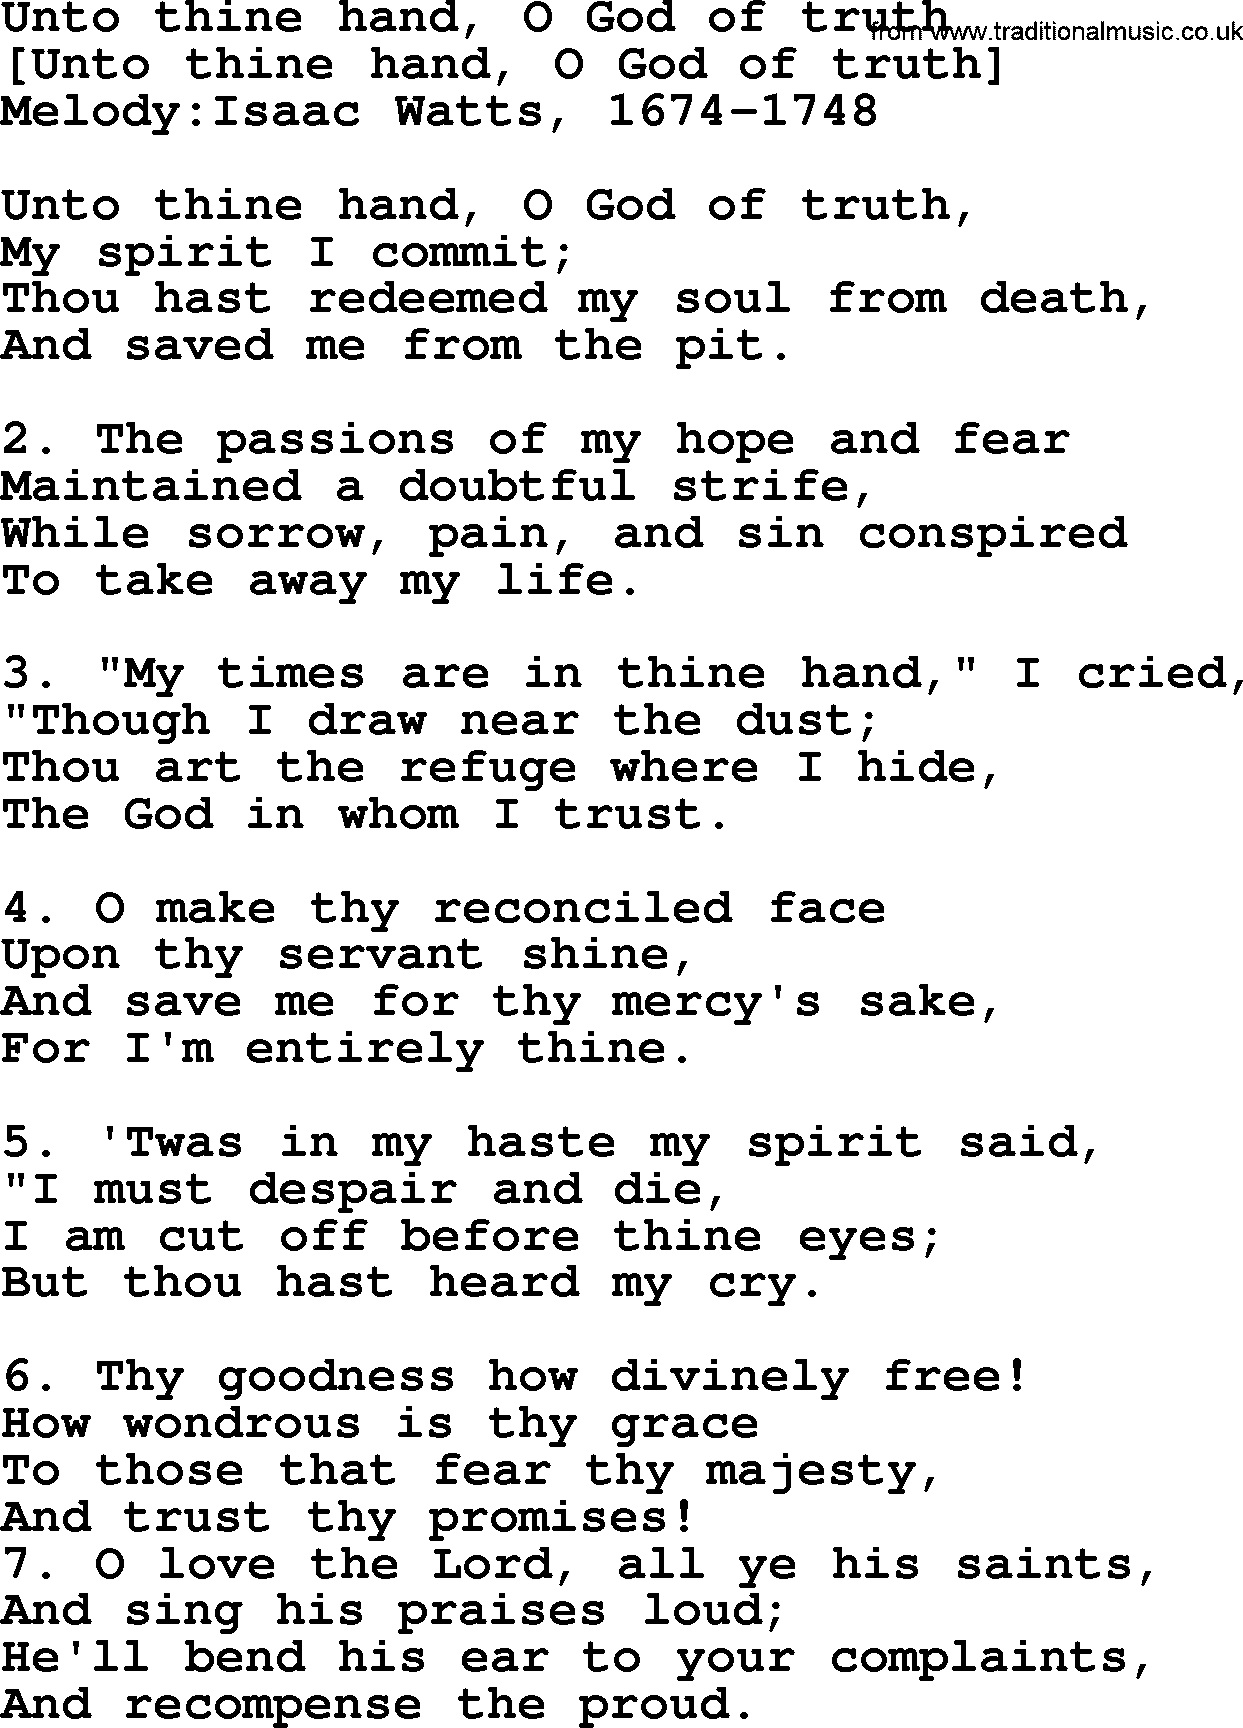 Old English Song: Unto Thine Hand, O God Of Truth lyrics